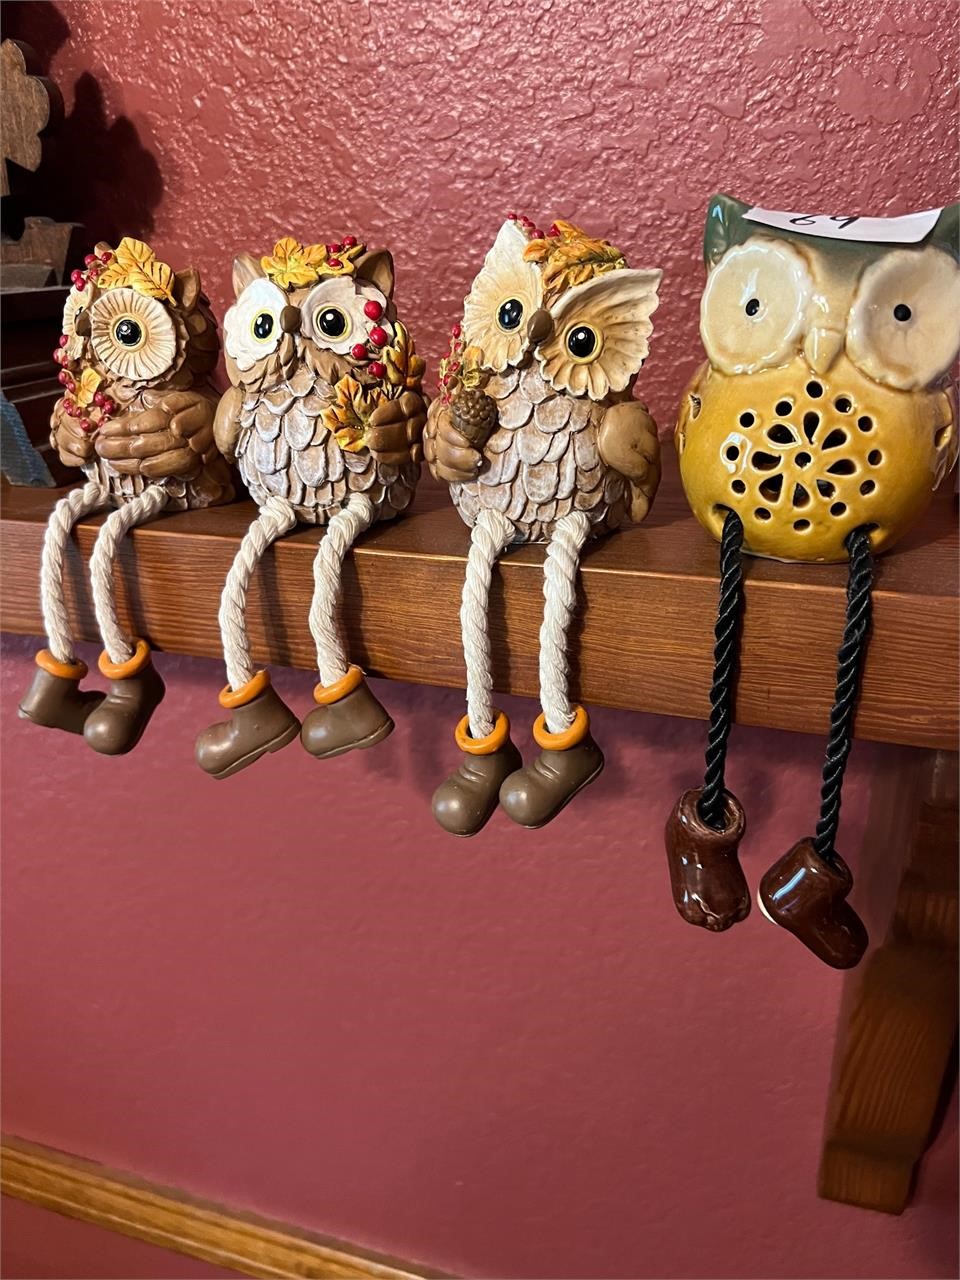 4 DECORATIVE OWLS